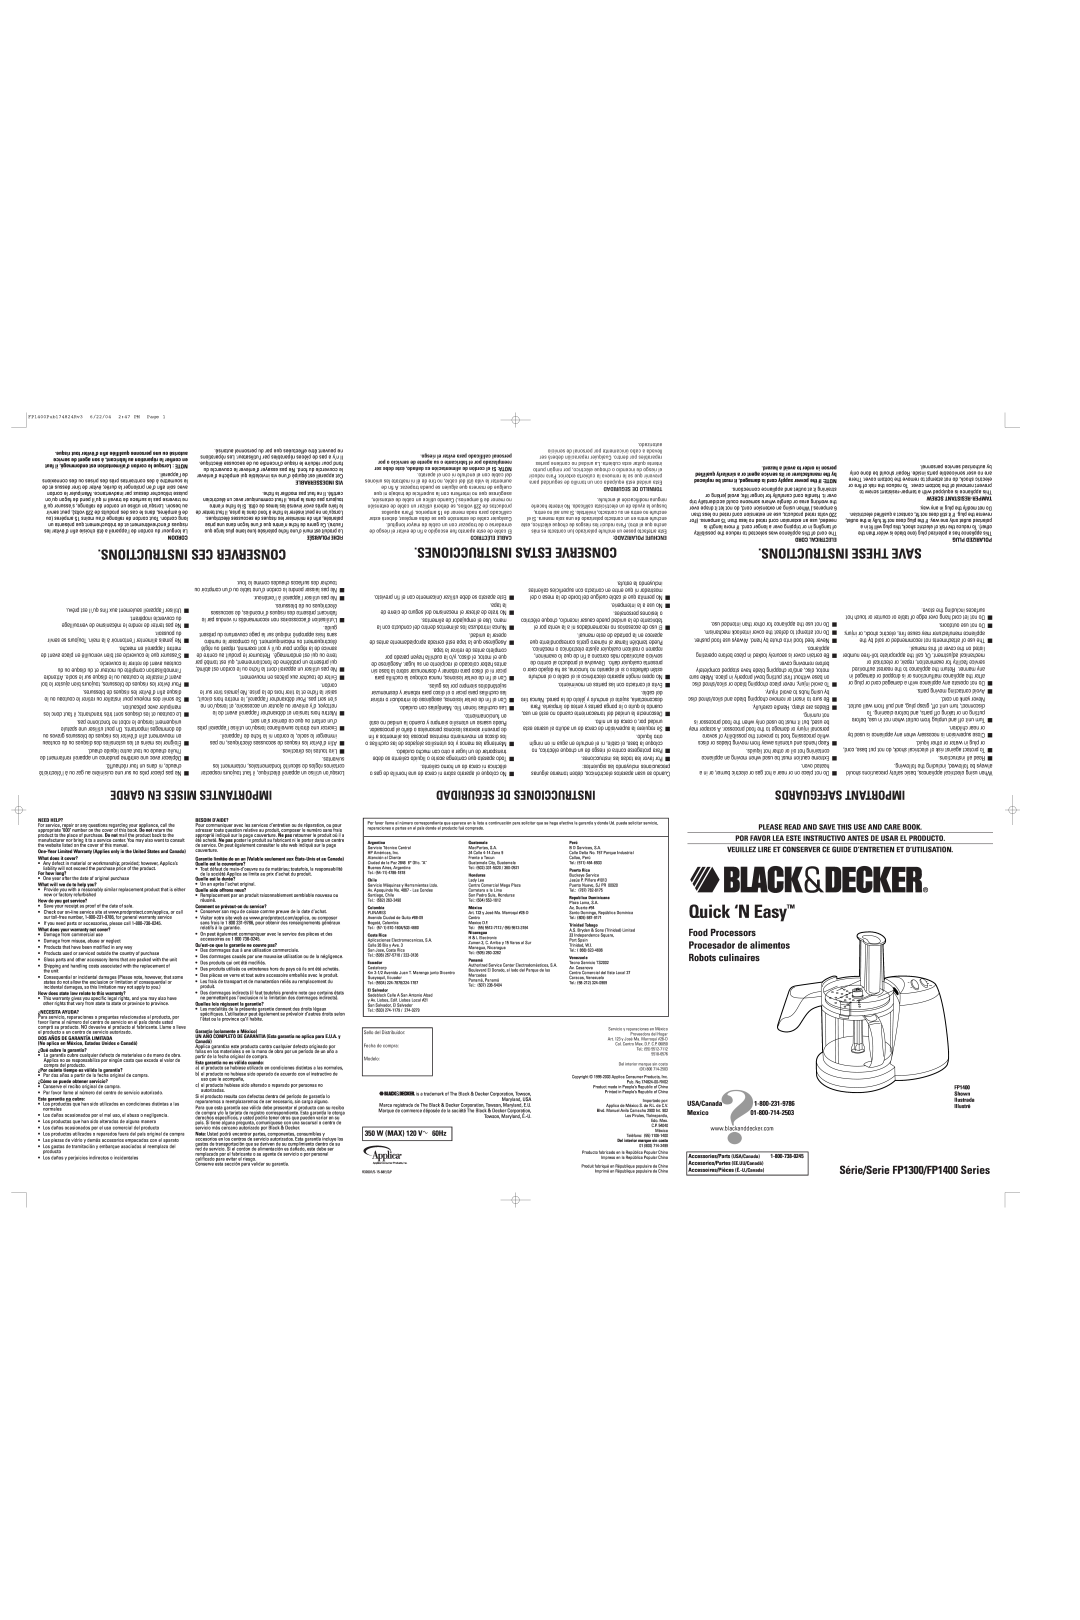 Black & Decker user manual Black & Decker Food Processor Fp1400 Quick N Easy, Download Here, Similar manuals 